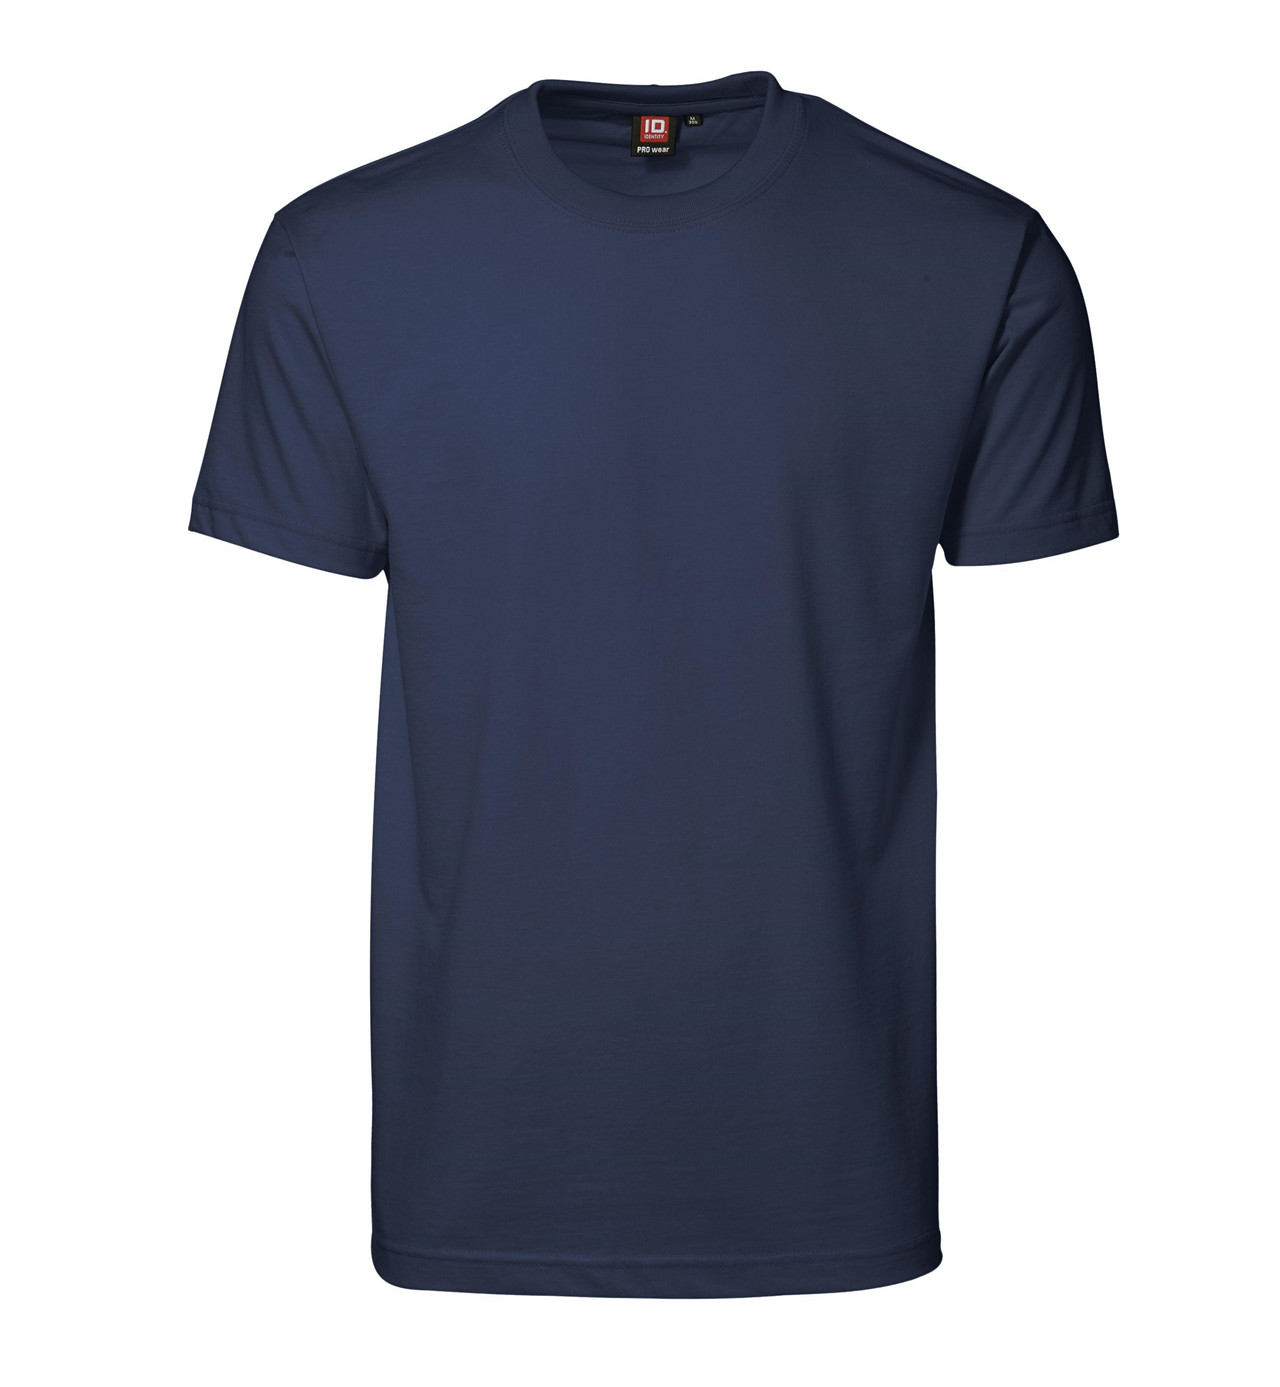 ID PRO Wear T-shirt til Herre (Navy, 3XL)